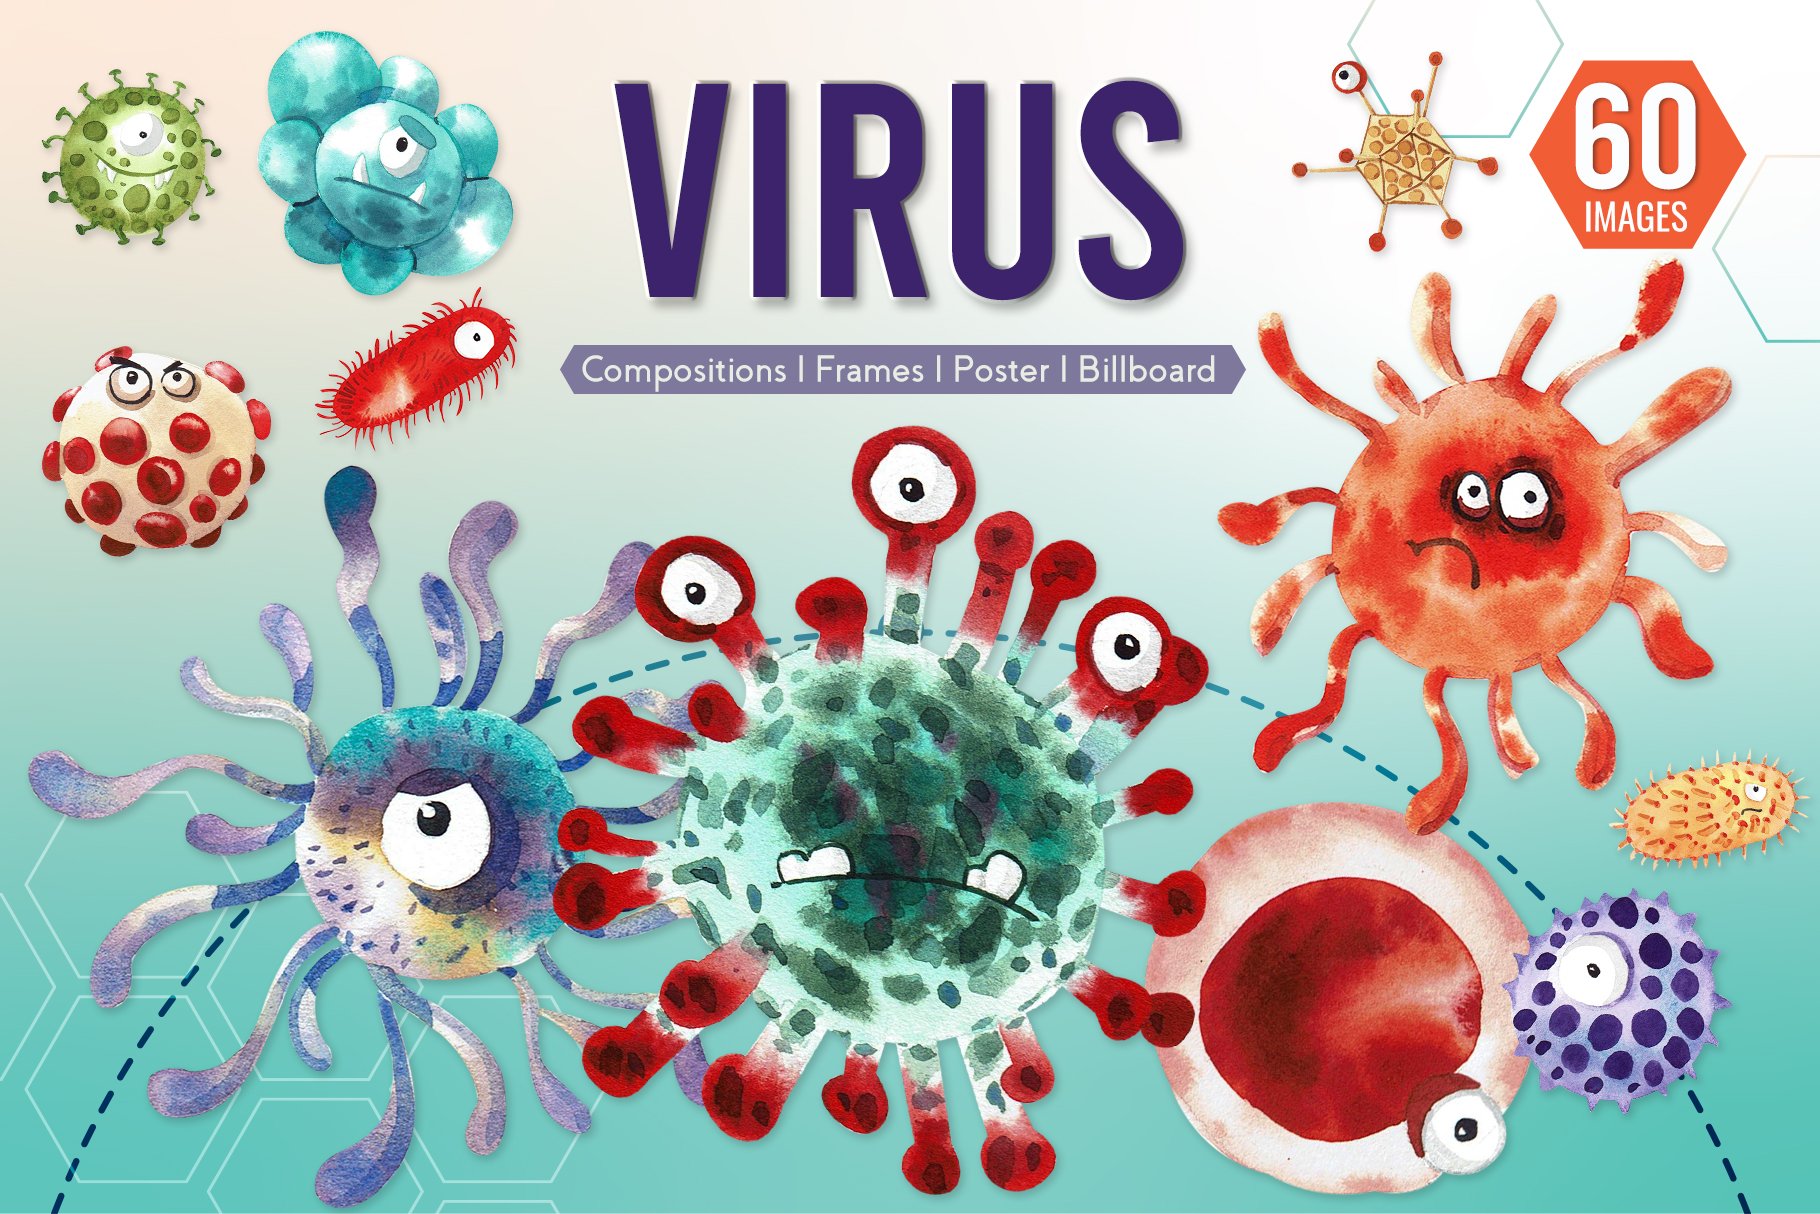 Cute Virus Cartoon Monster Character cover image.